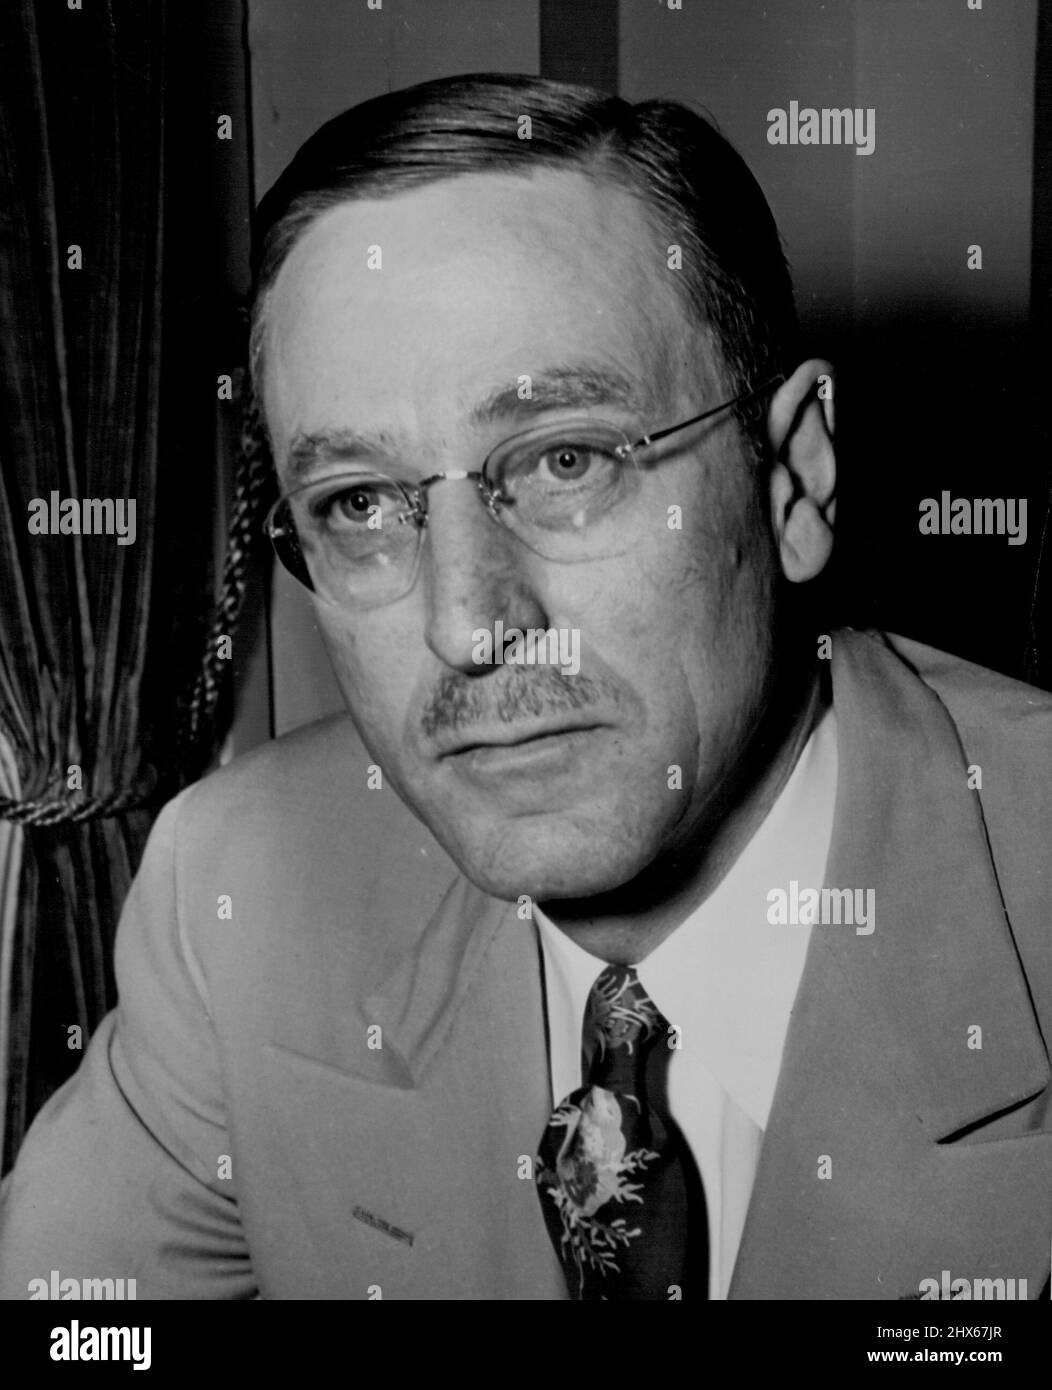 Senator Milton R. Young (R-N.D.) Farmer - Politician Born: Berlin, N. Dak., December. 6, 1897 Educated: La Moure County (N. Dak.) public schools, grad. La Moure H.S., 1915; Attended - North Dakota State Agricultural College; at Lamoni, Iowa, attended Graceland College. Farming near Berlin, N. Dak. North Dakota State representative, 1932- State Senator, 1934-35 Appointed U.S. Senate Mar. 12, 1945 Photographed in Washington, D.C., July 25, 1946. August 26, 1946. (Photo by Wide World Photos). Stock Photo